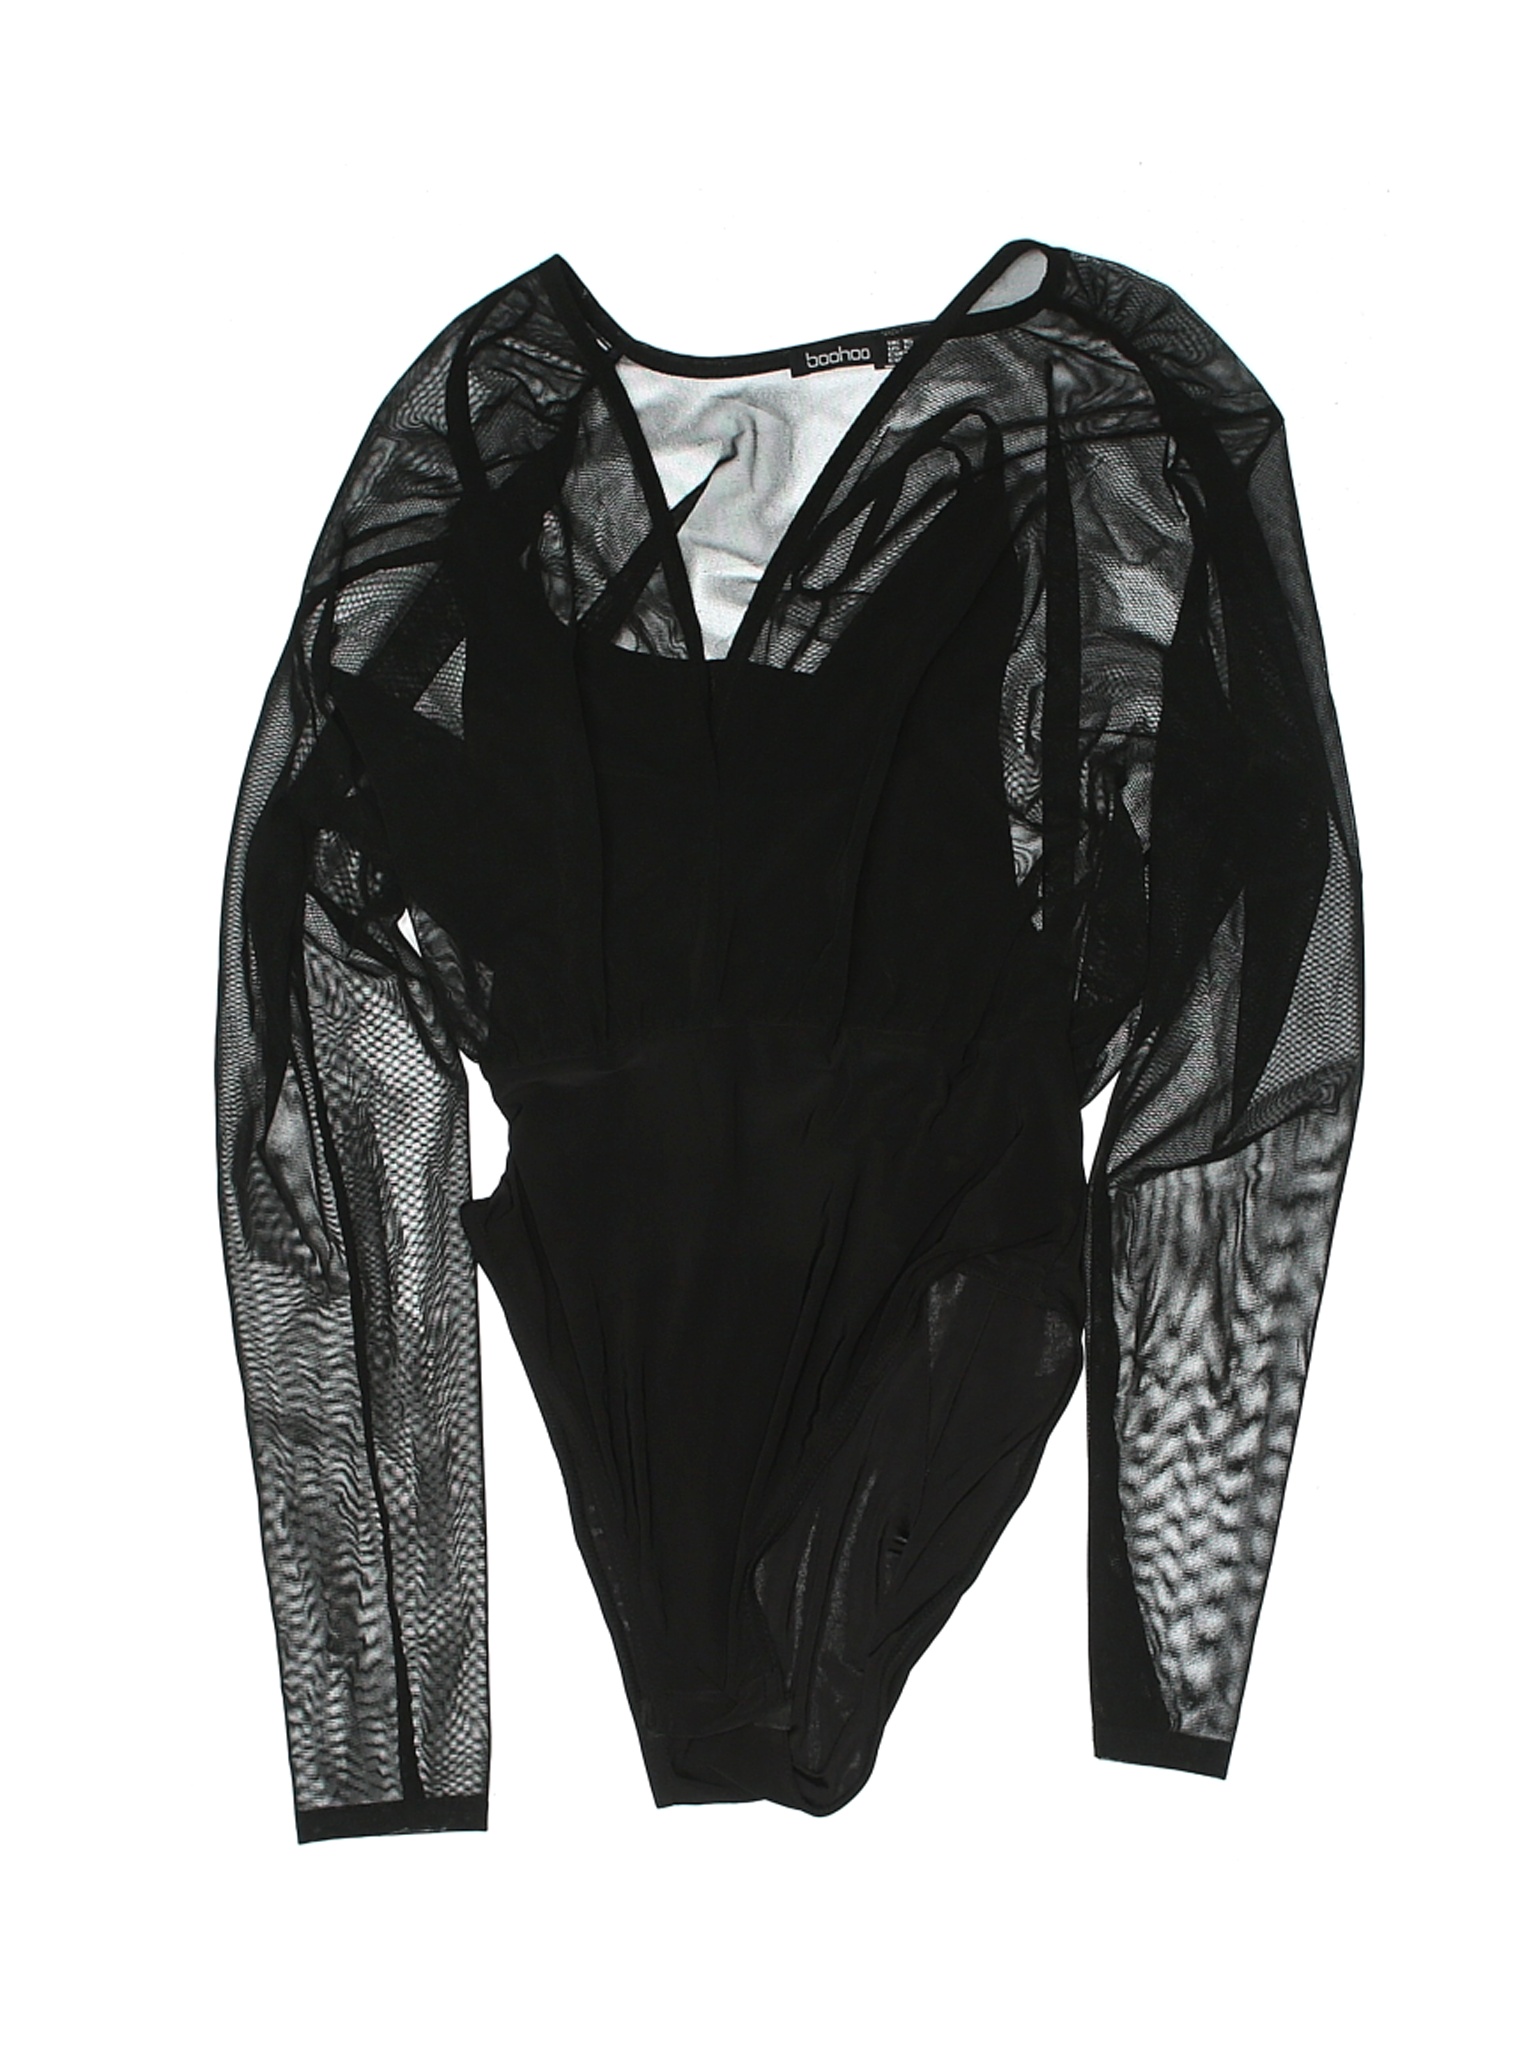 Boohoo Boutique Women Black Bodysuit 12 | eBay